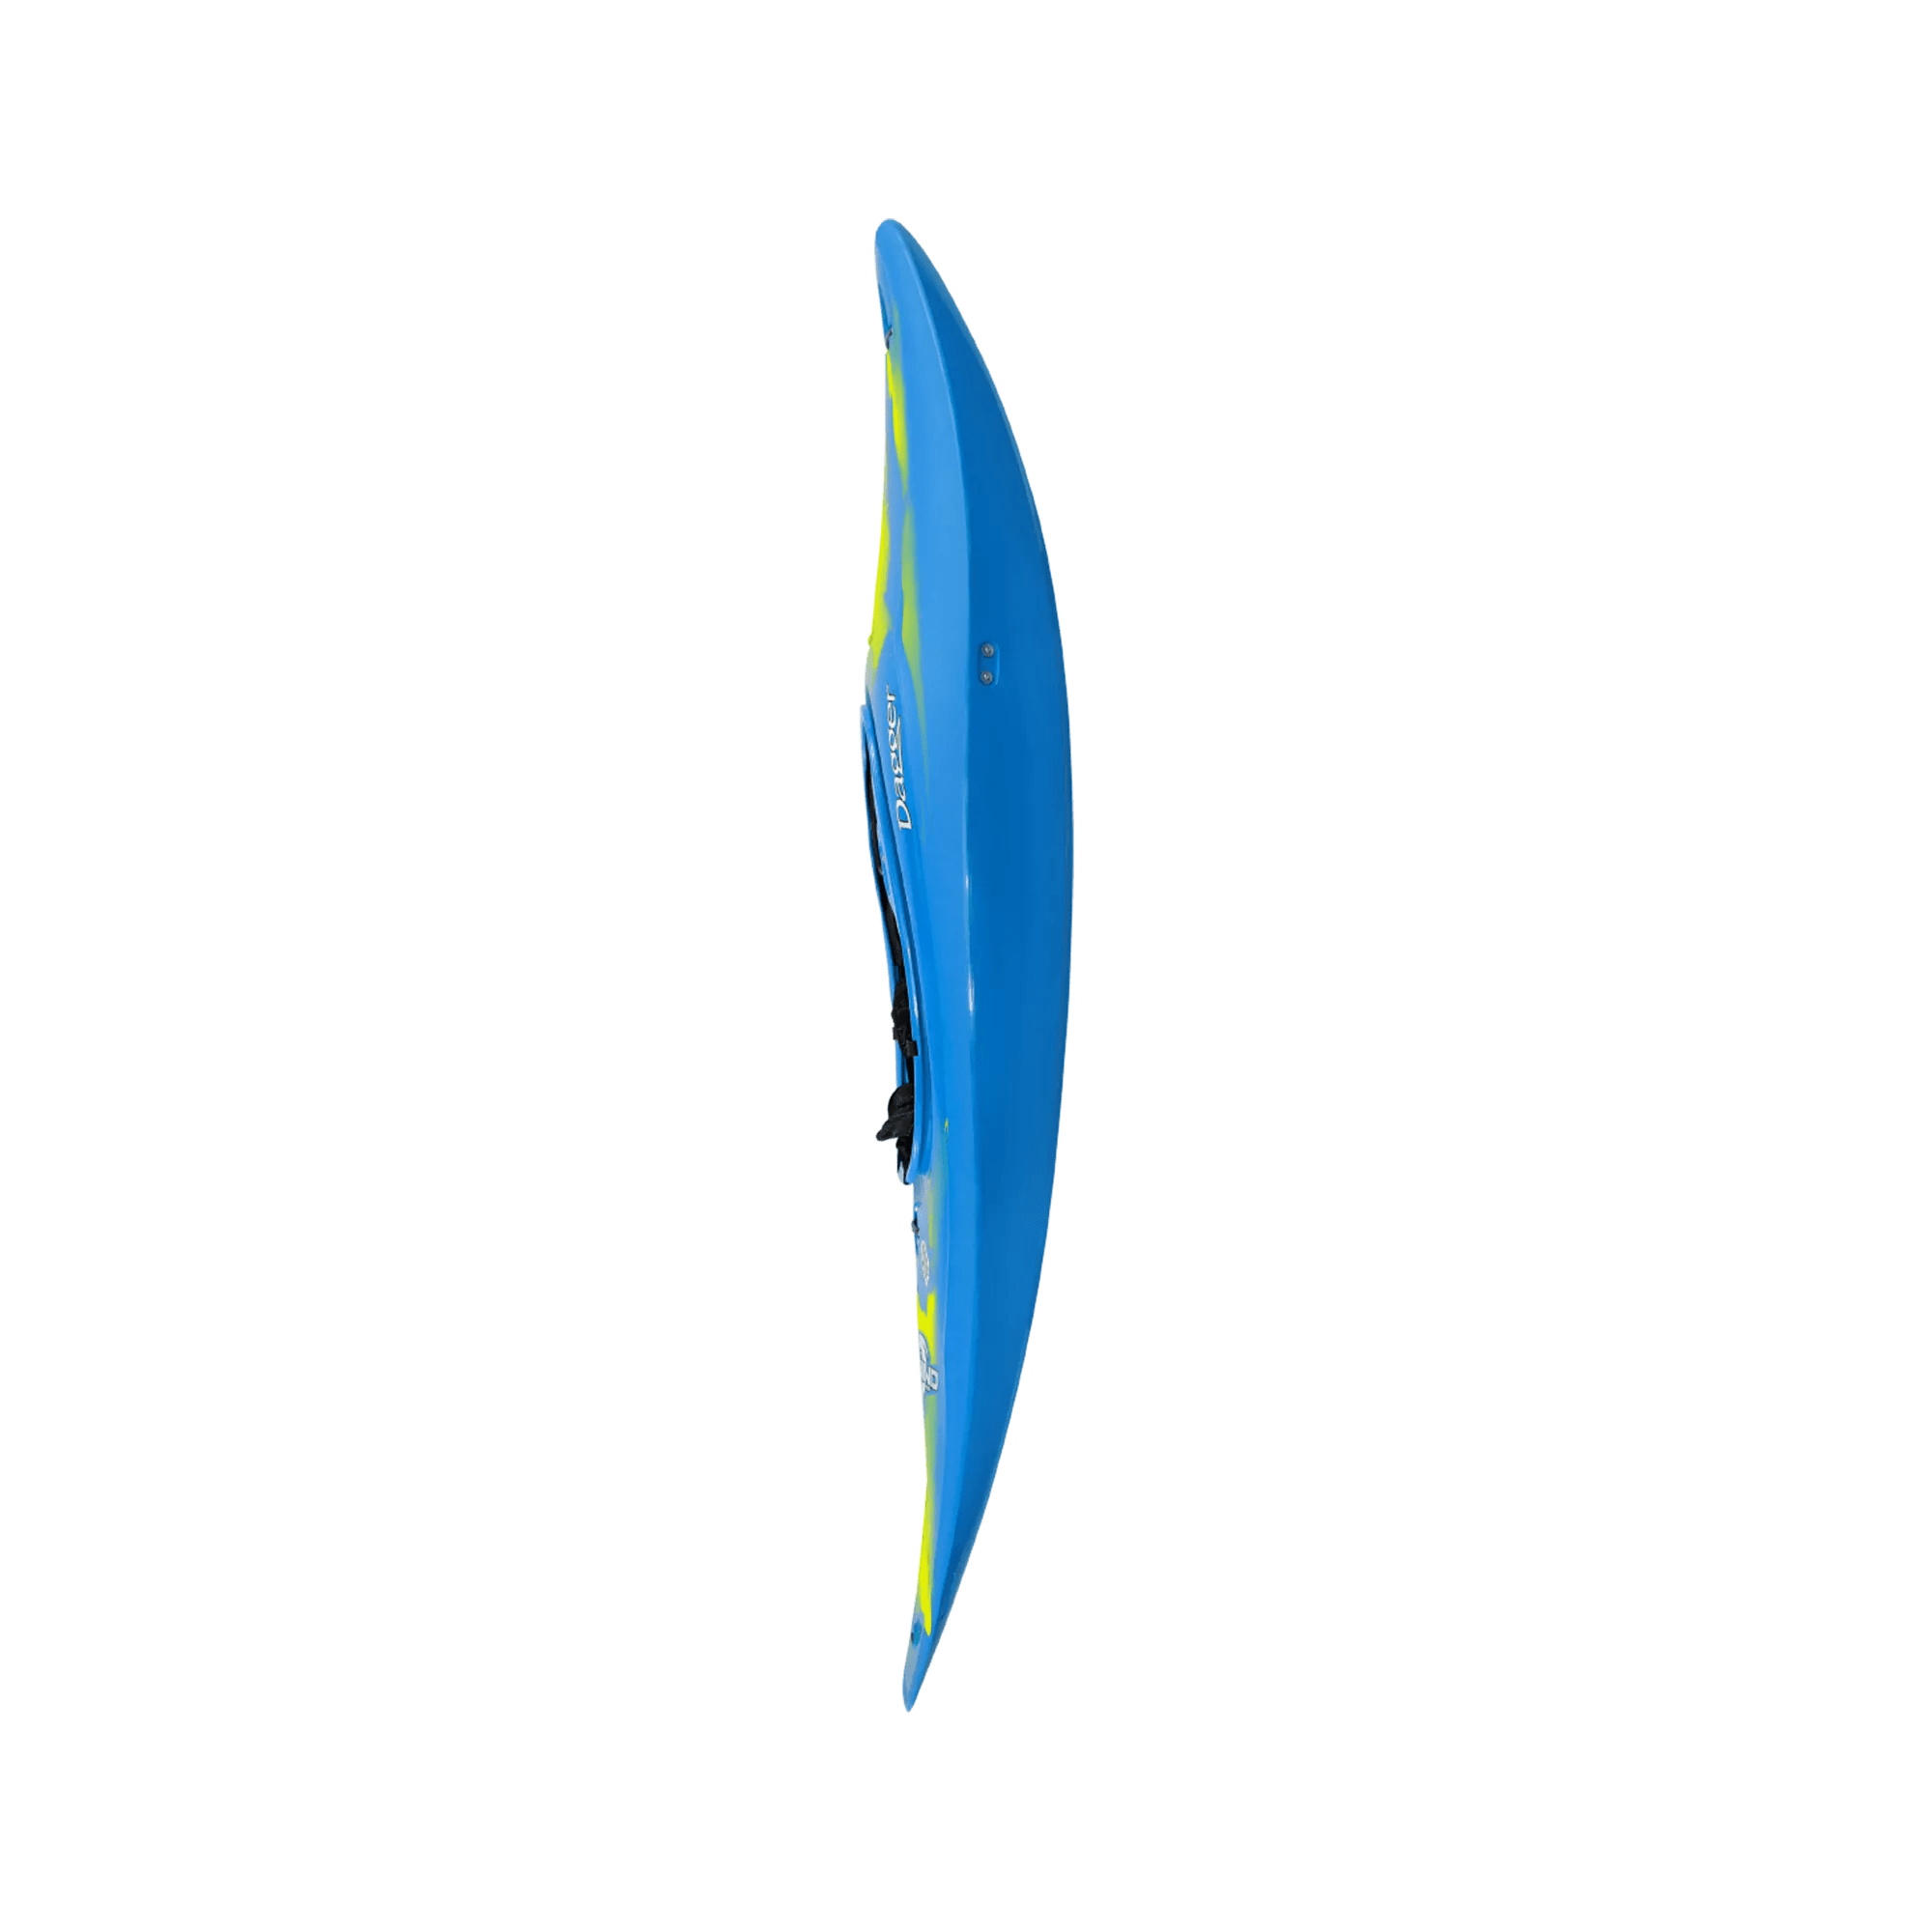 DAGGER - Rewind SM River Play Whitewater Kayak - Blue - 9010470197 - SIDE